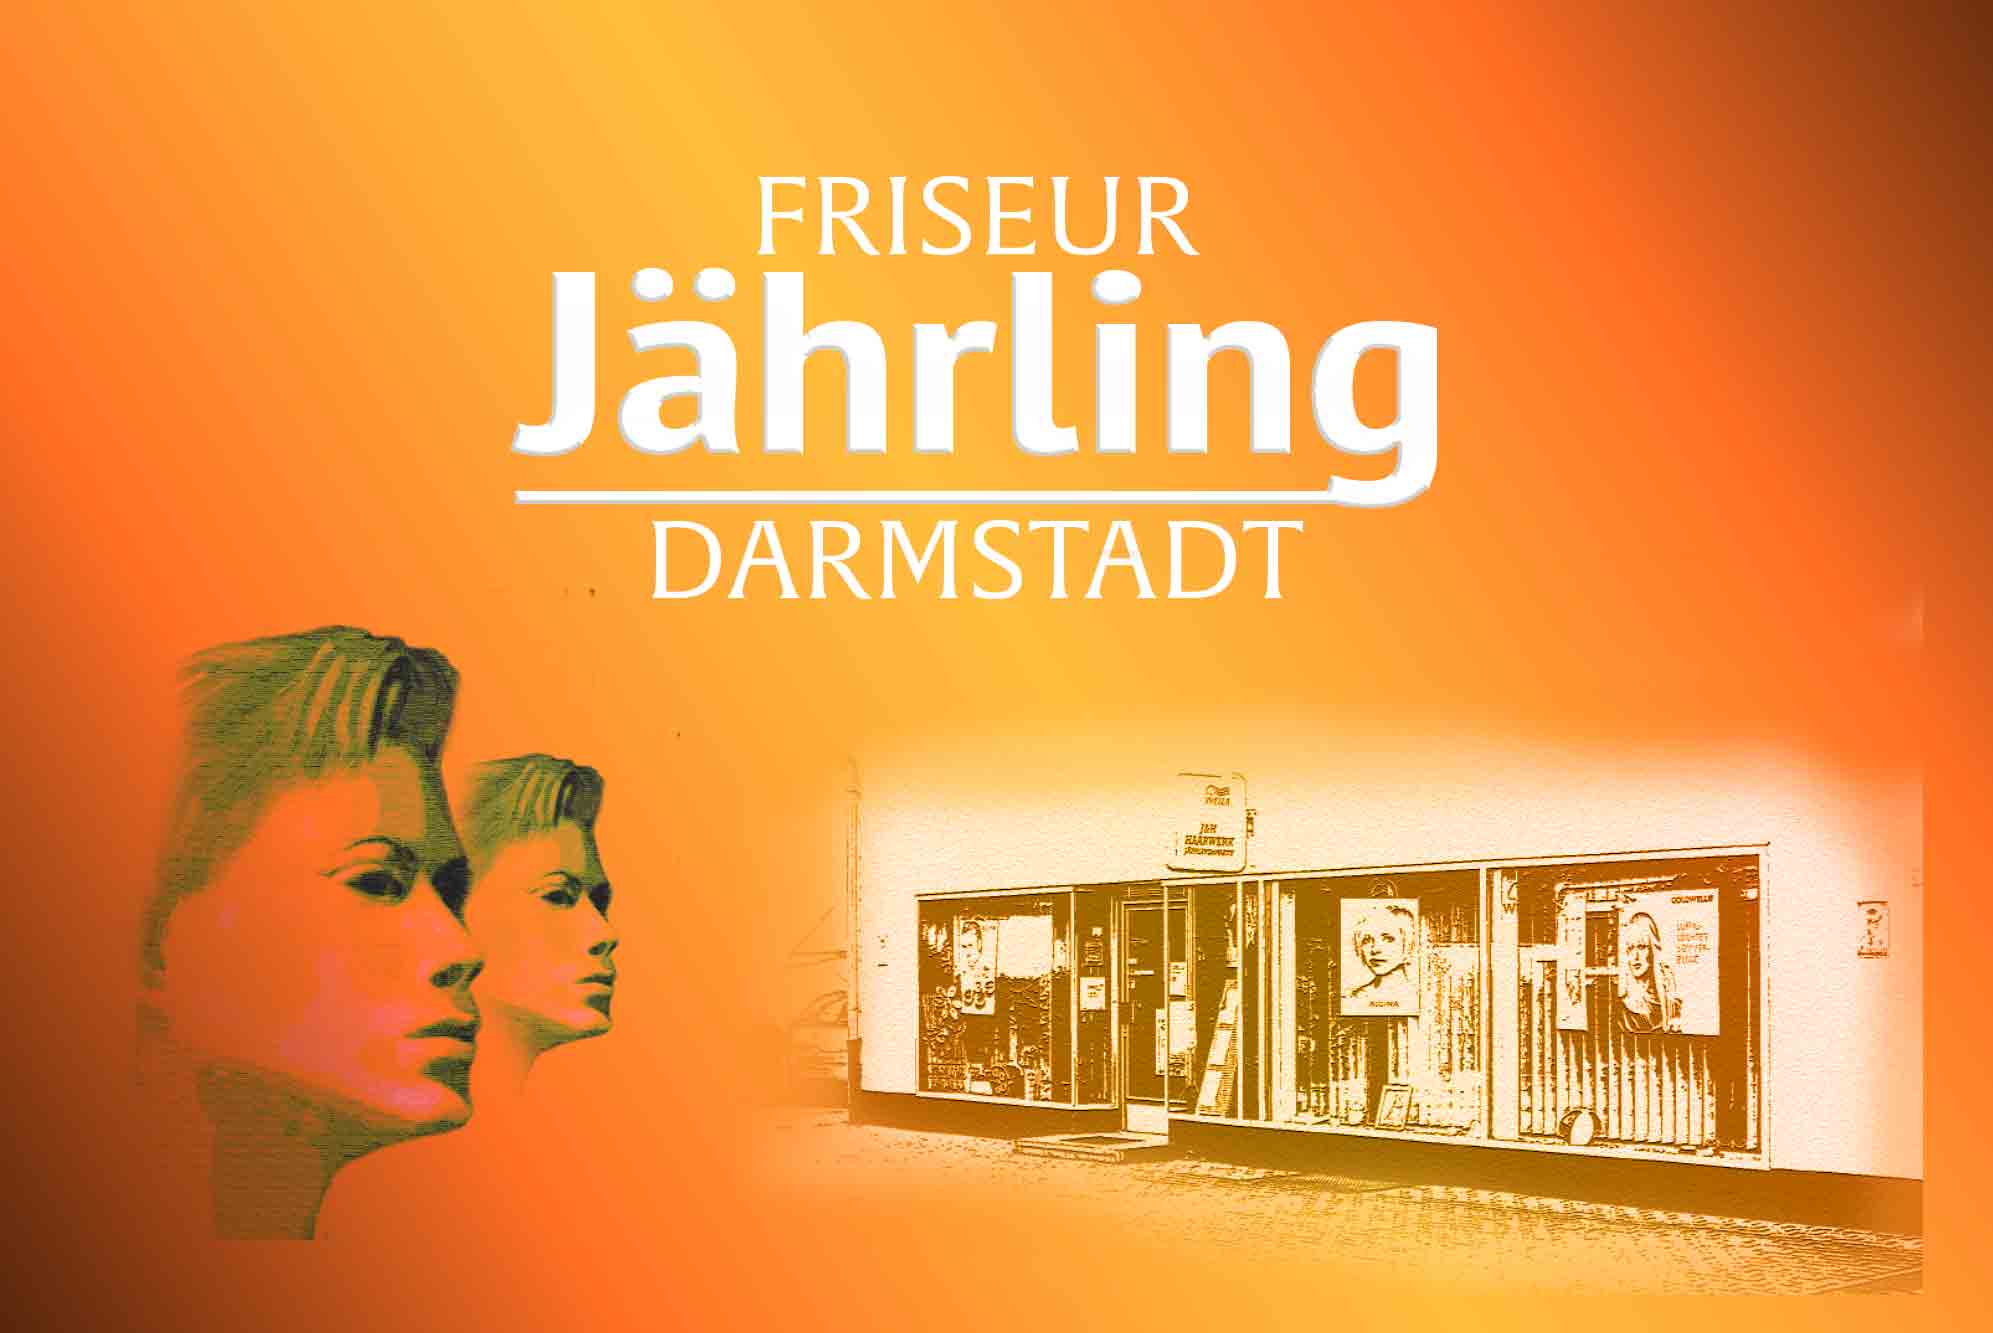 Friseur Jährling